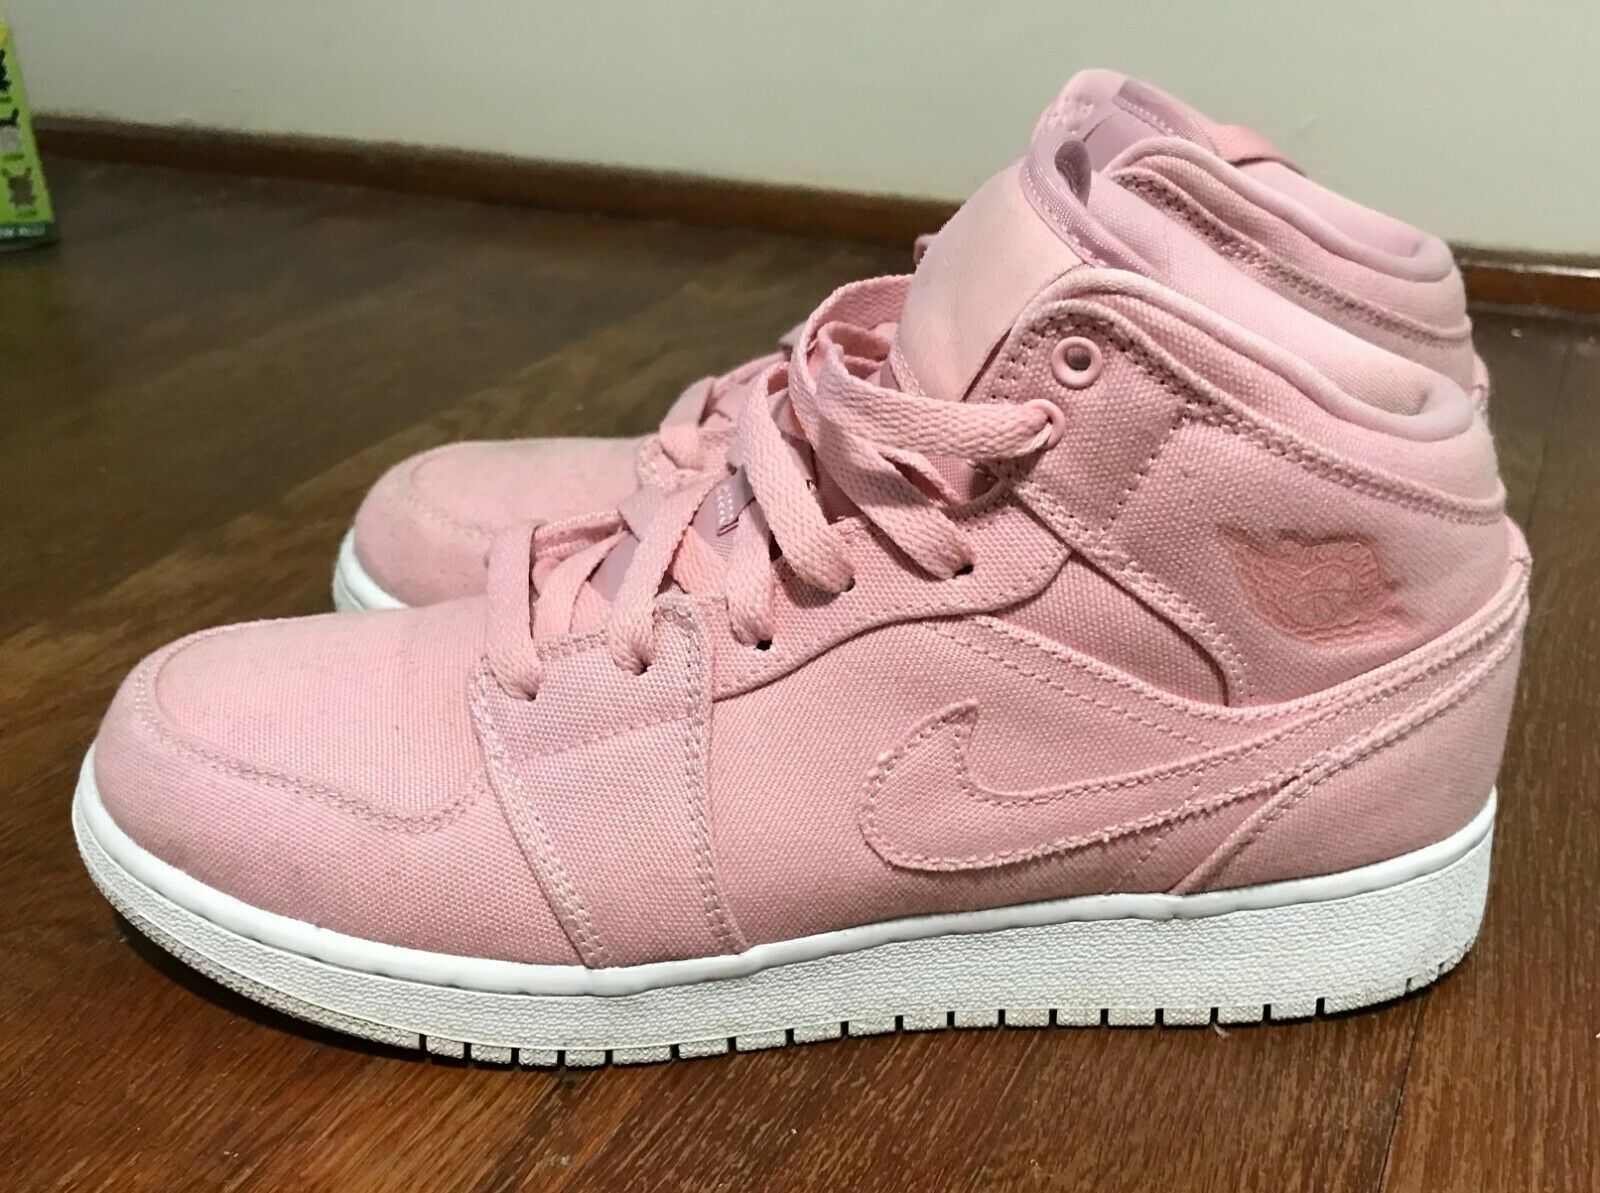 Nike Air Jordan 1 Pink Mid "Easter Pack" for Girls/Women - rare high-top shoes